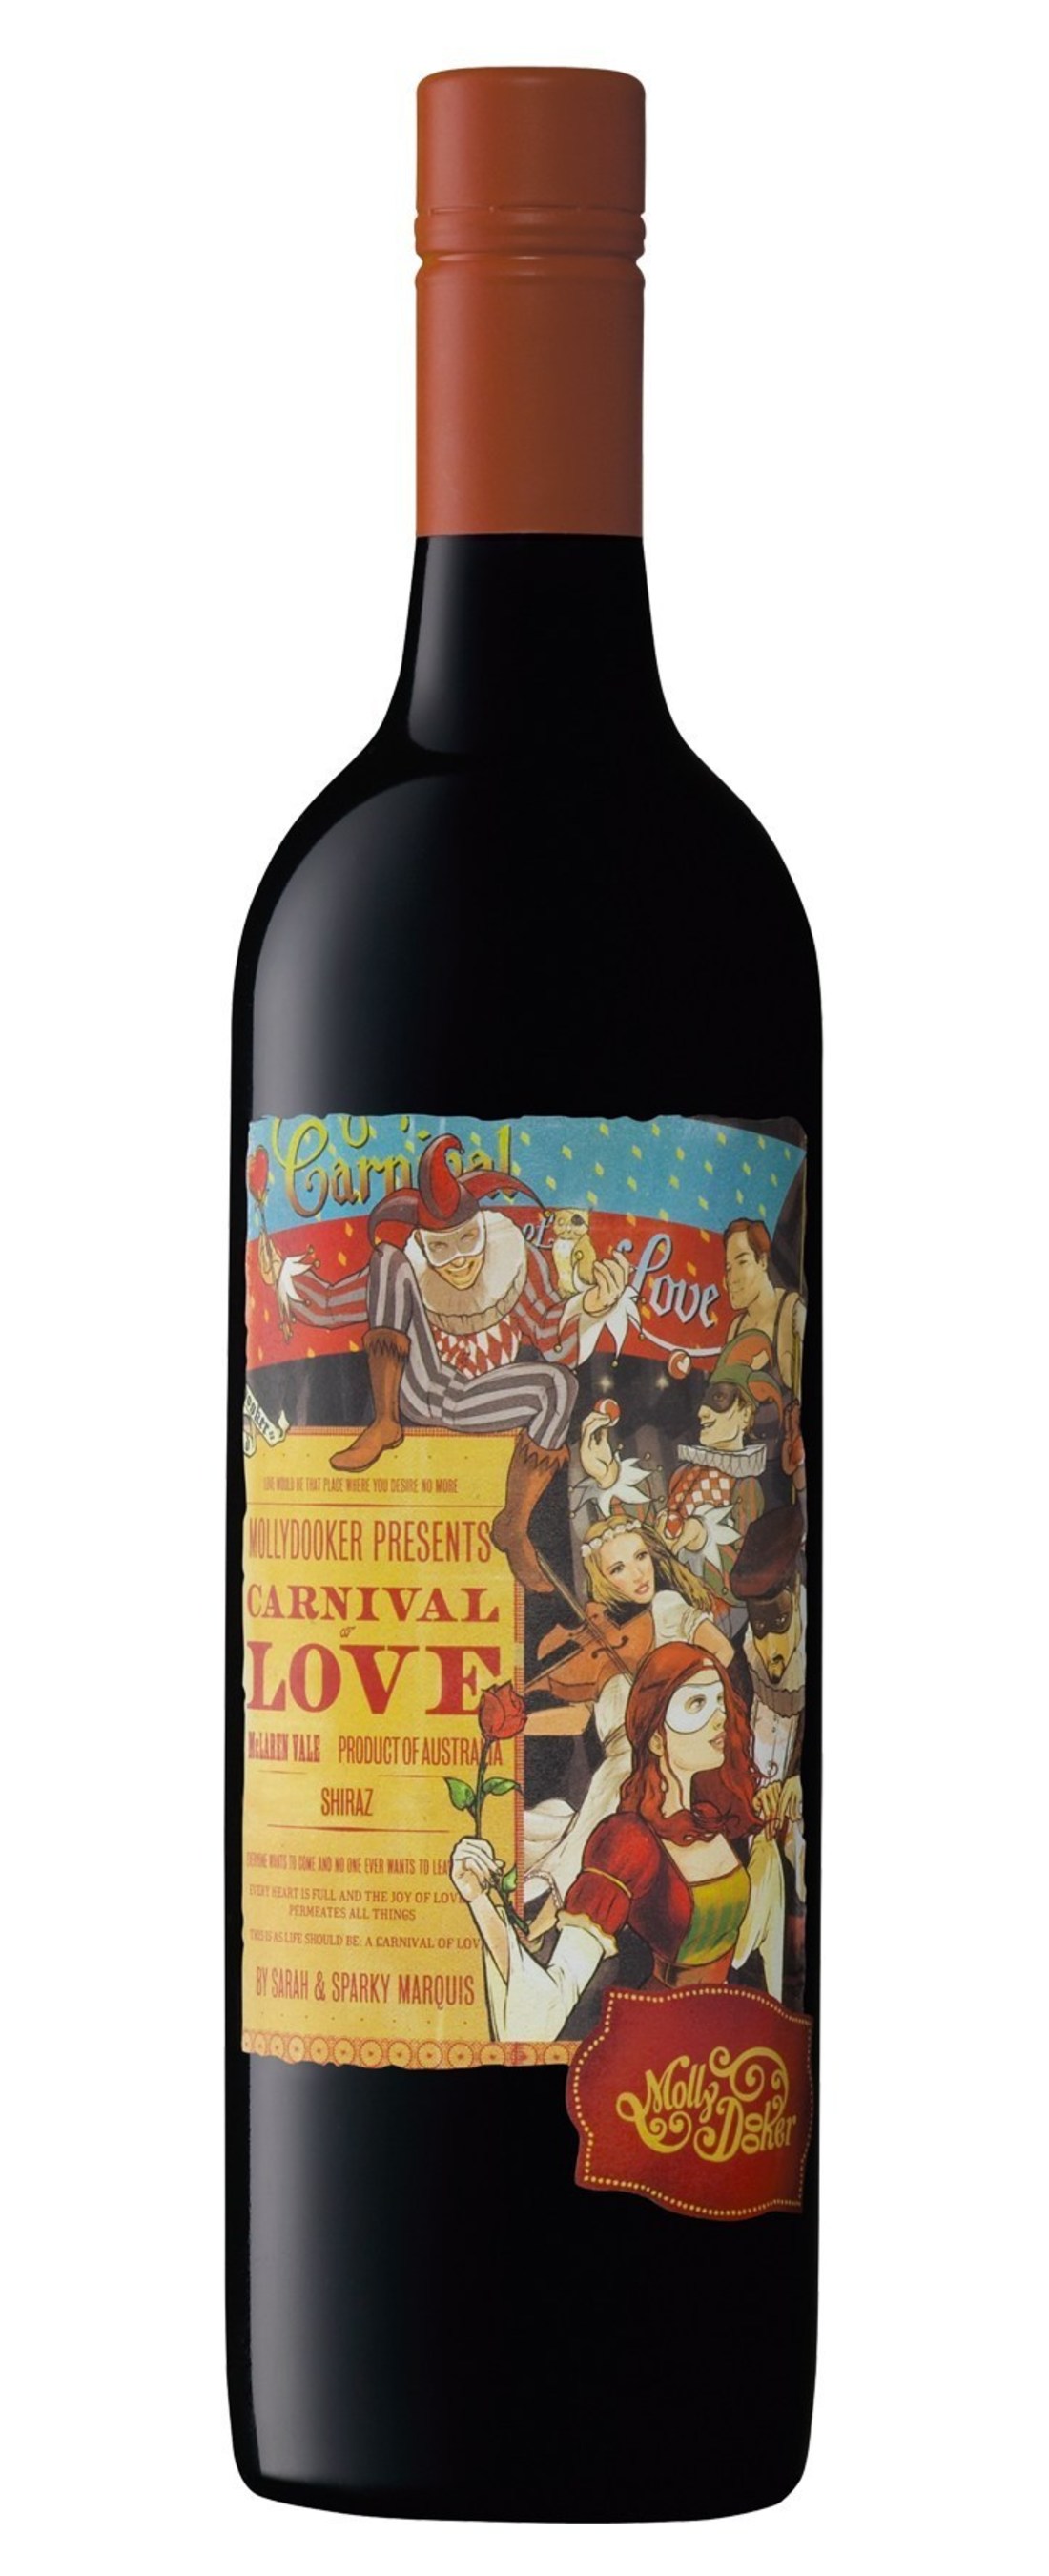 Mollydooker 2012 Carnival of Love Shiraz 2014 Winestate #1 Wine and #1 Shiraz in AUS & NZ